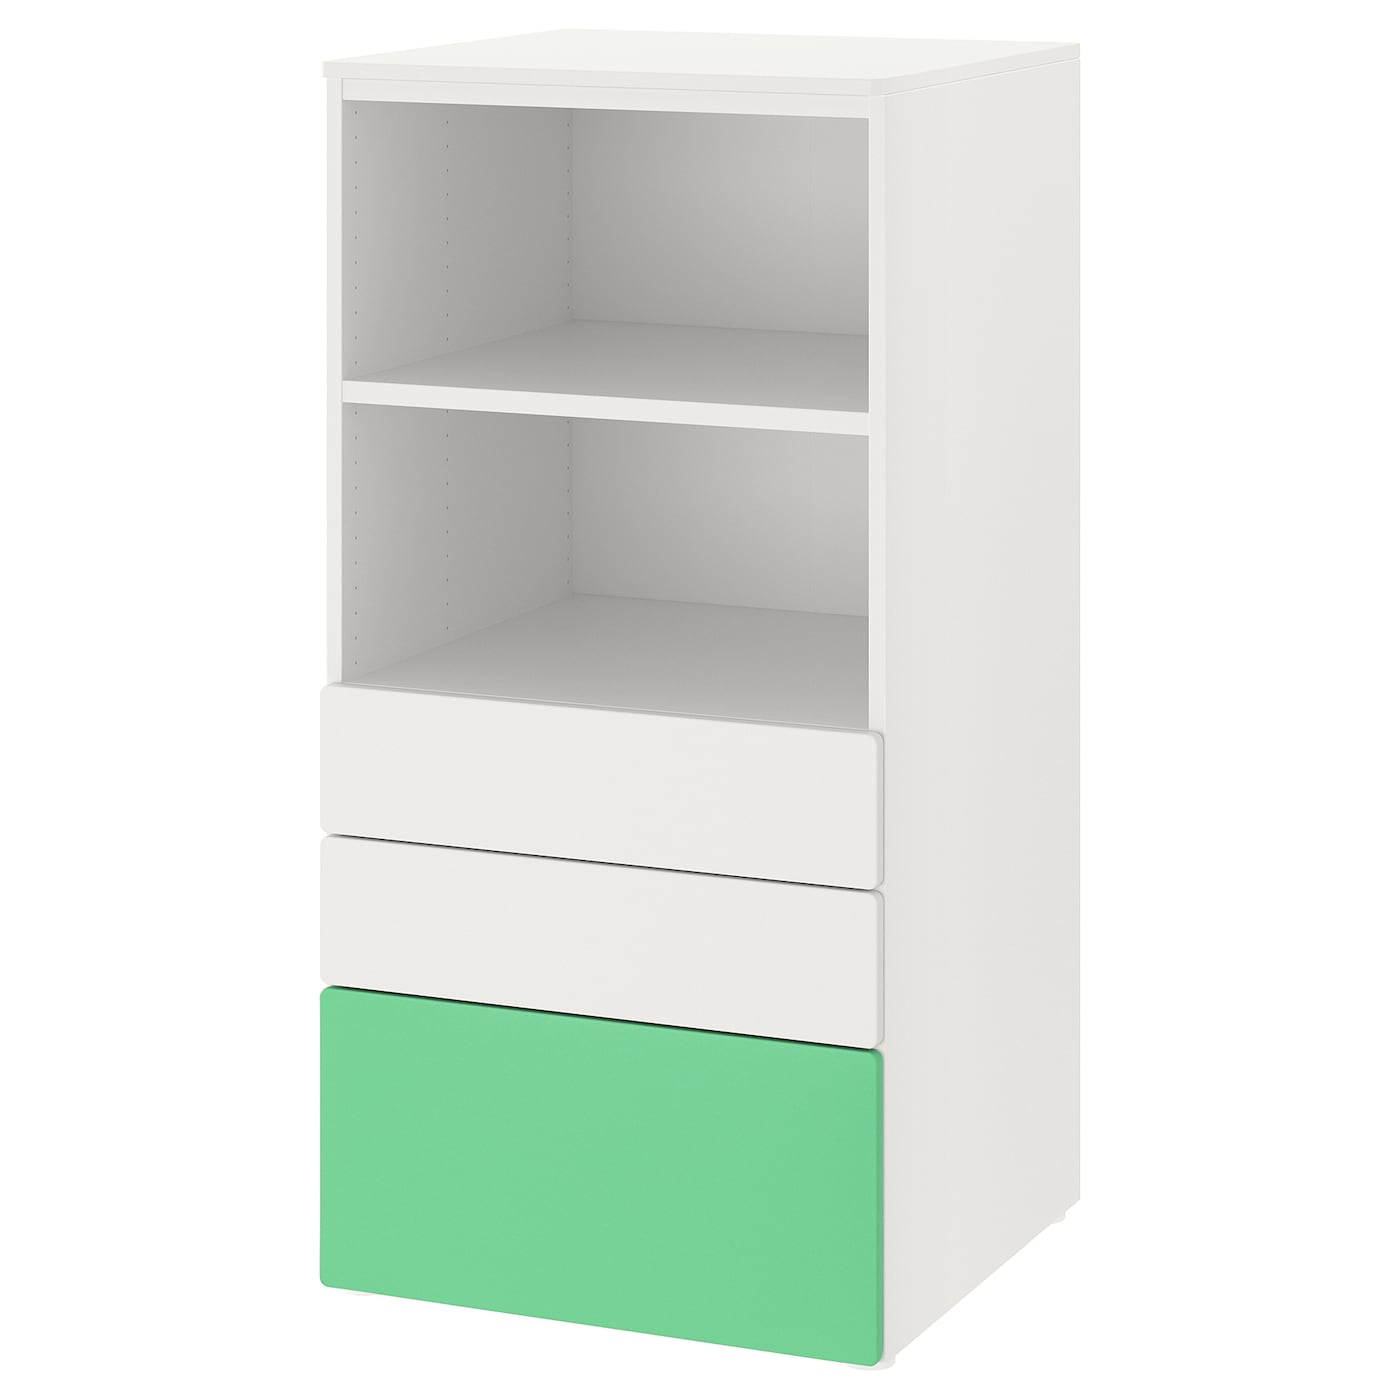 Шкаф - PLATSA/ SMÅSTAD / SMАSTAD  IKEA/ ПЛАТСА/СМОСТАД  ИКЕА, 60x55x123 см, белый/зеленый